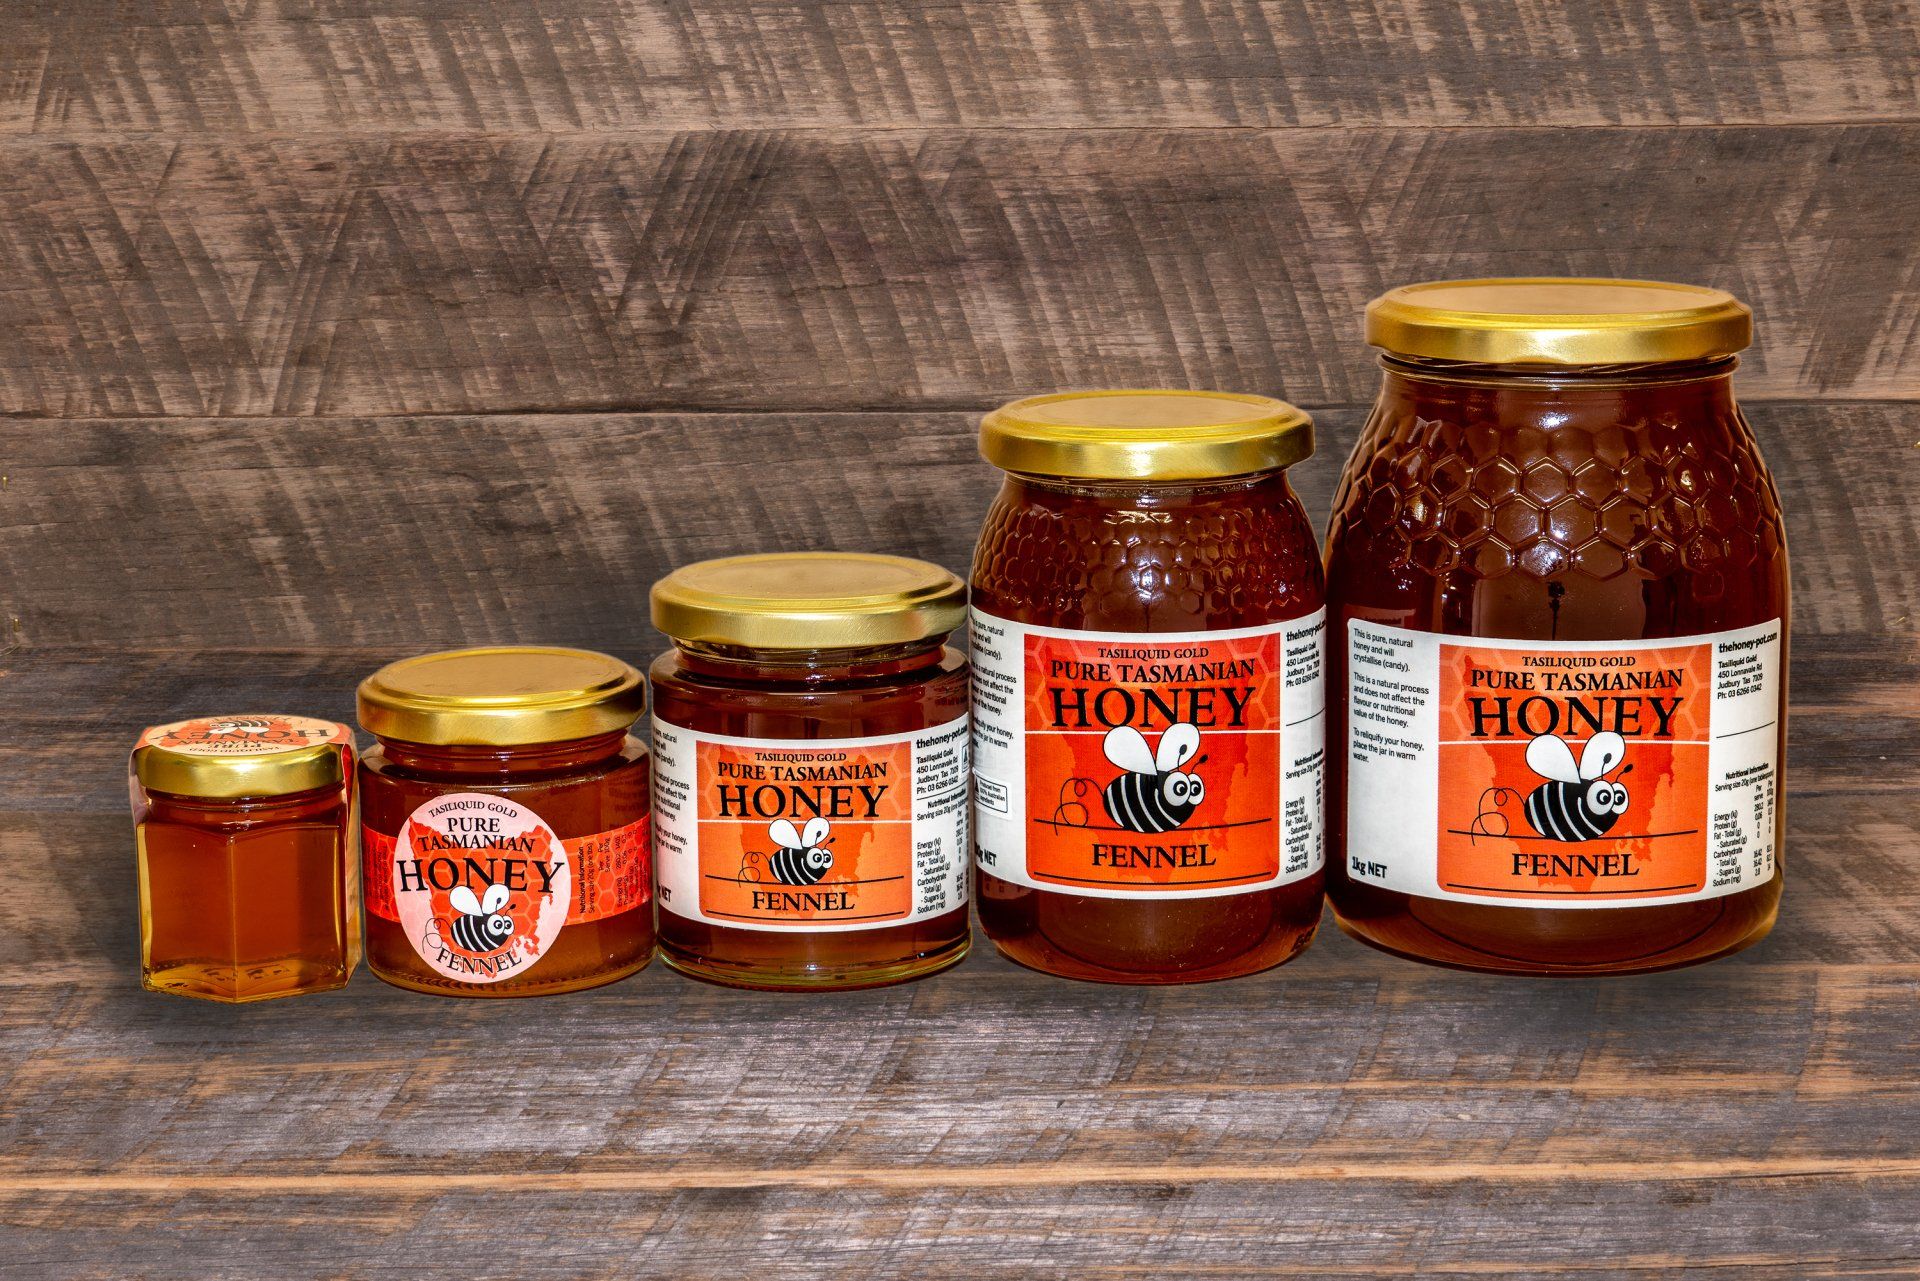 Honey Label — Hobart, TAS — Labelpress Printing Services Pty Ltd